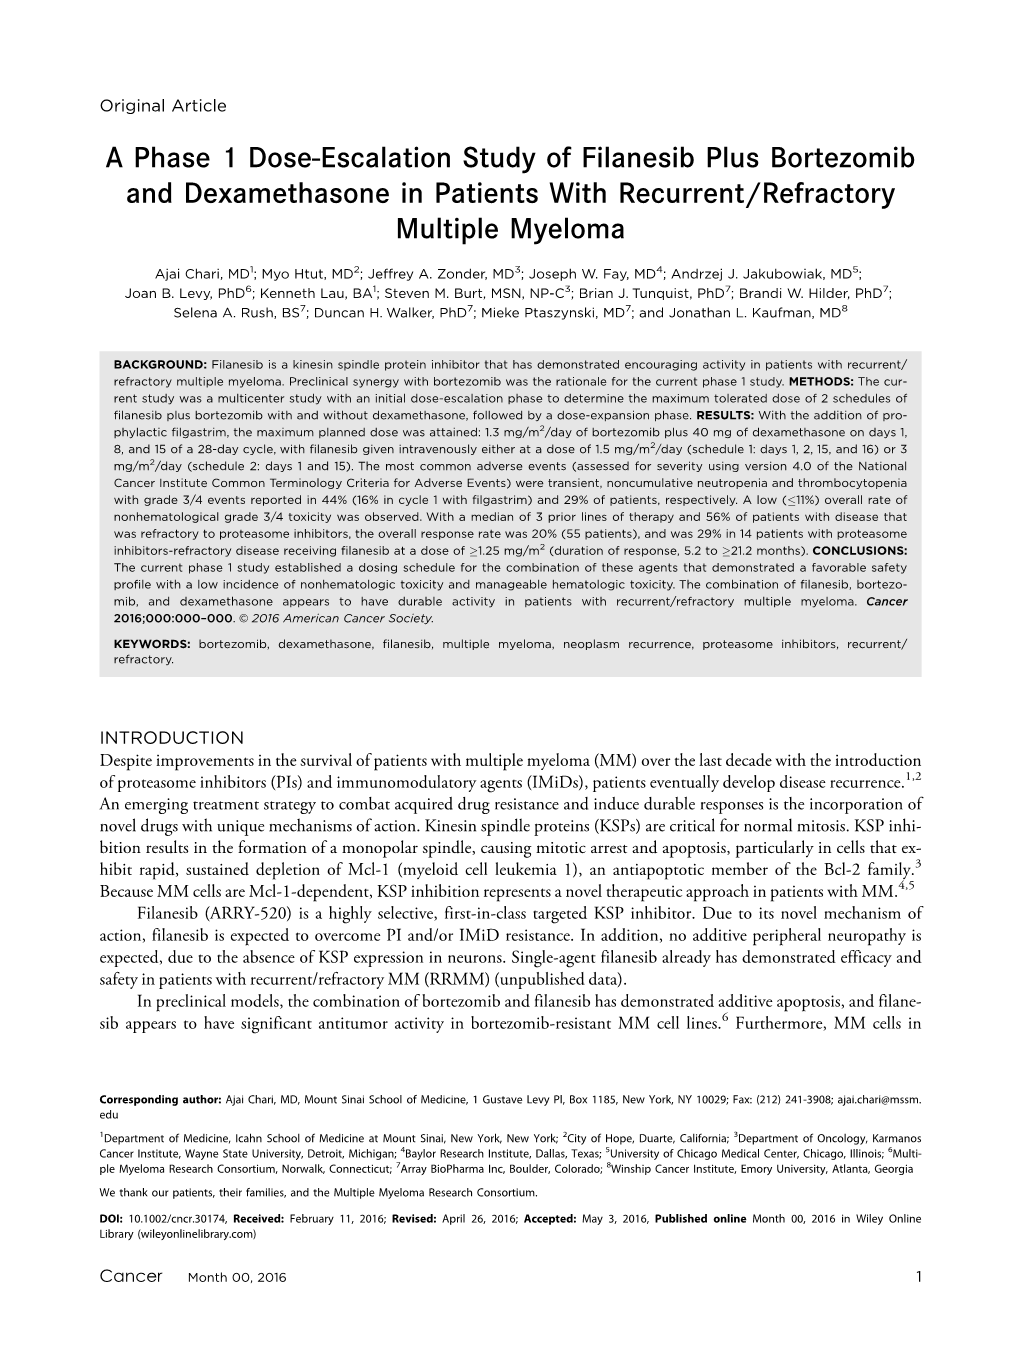 Escalation Study of Filanesib Plus Bortezomib and Dexamethasone in Patients with Recurrent/Refractory Multiple Myeloma